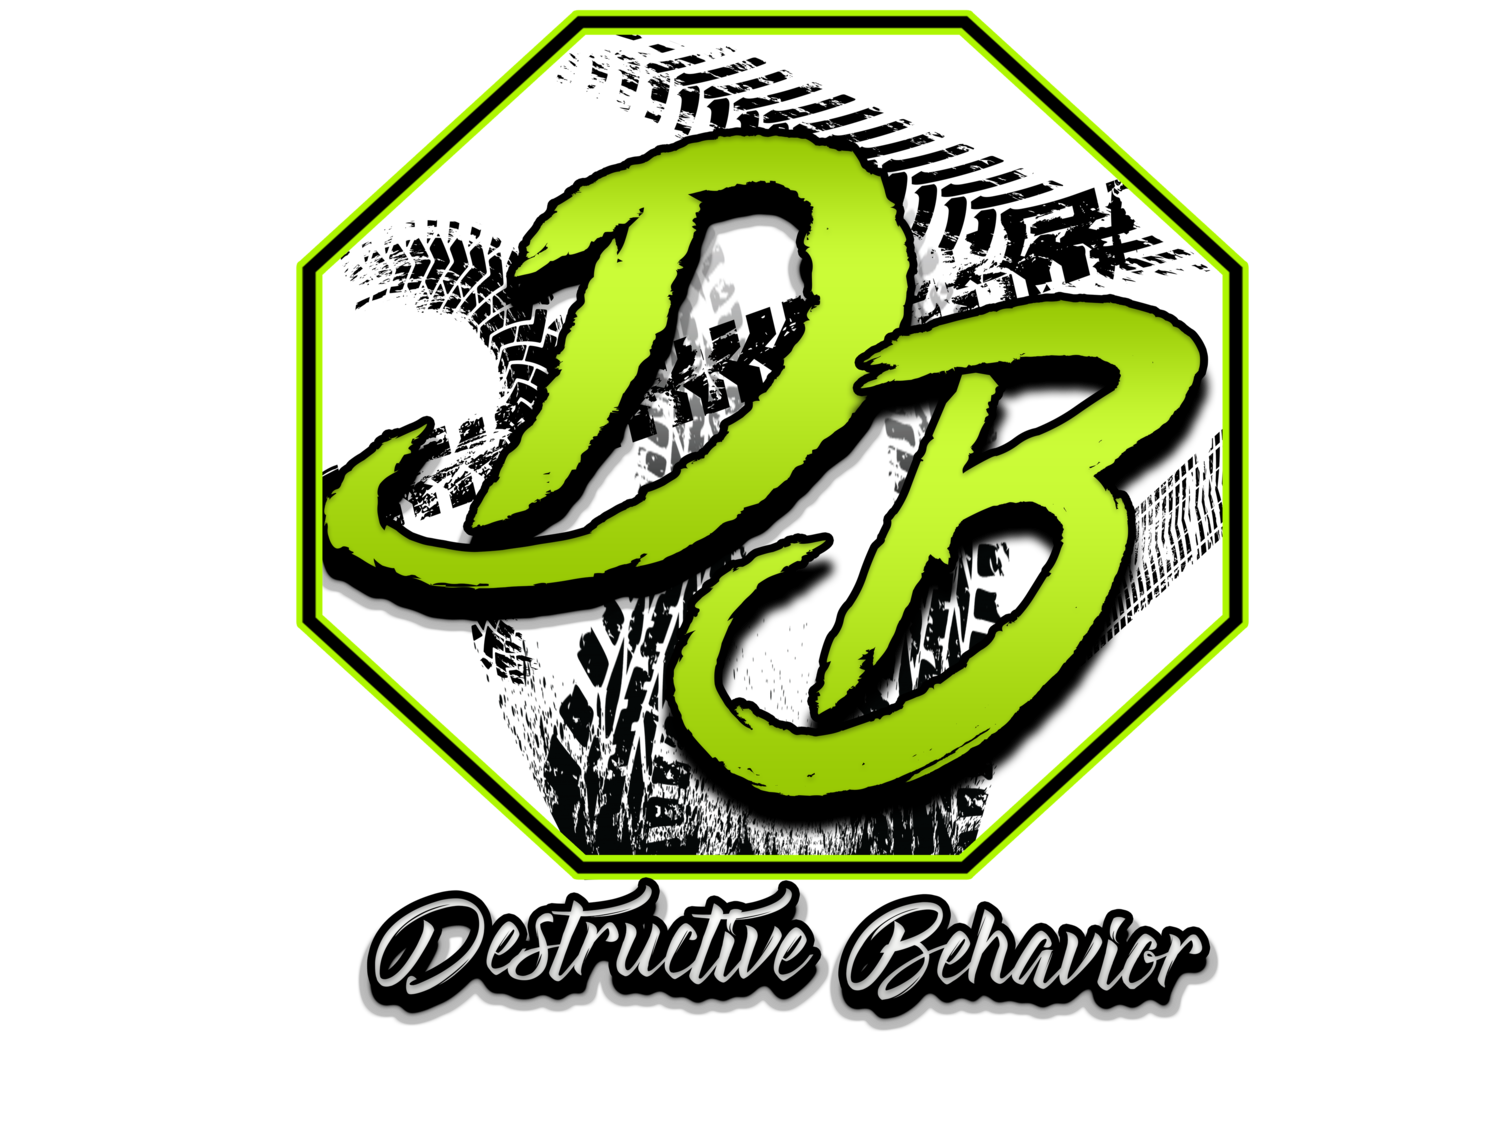 Destructive Behavior